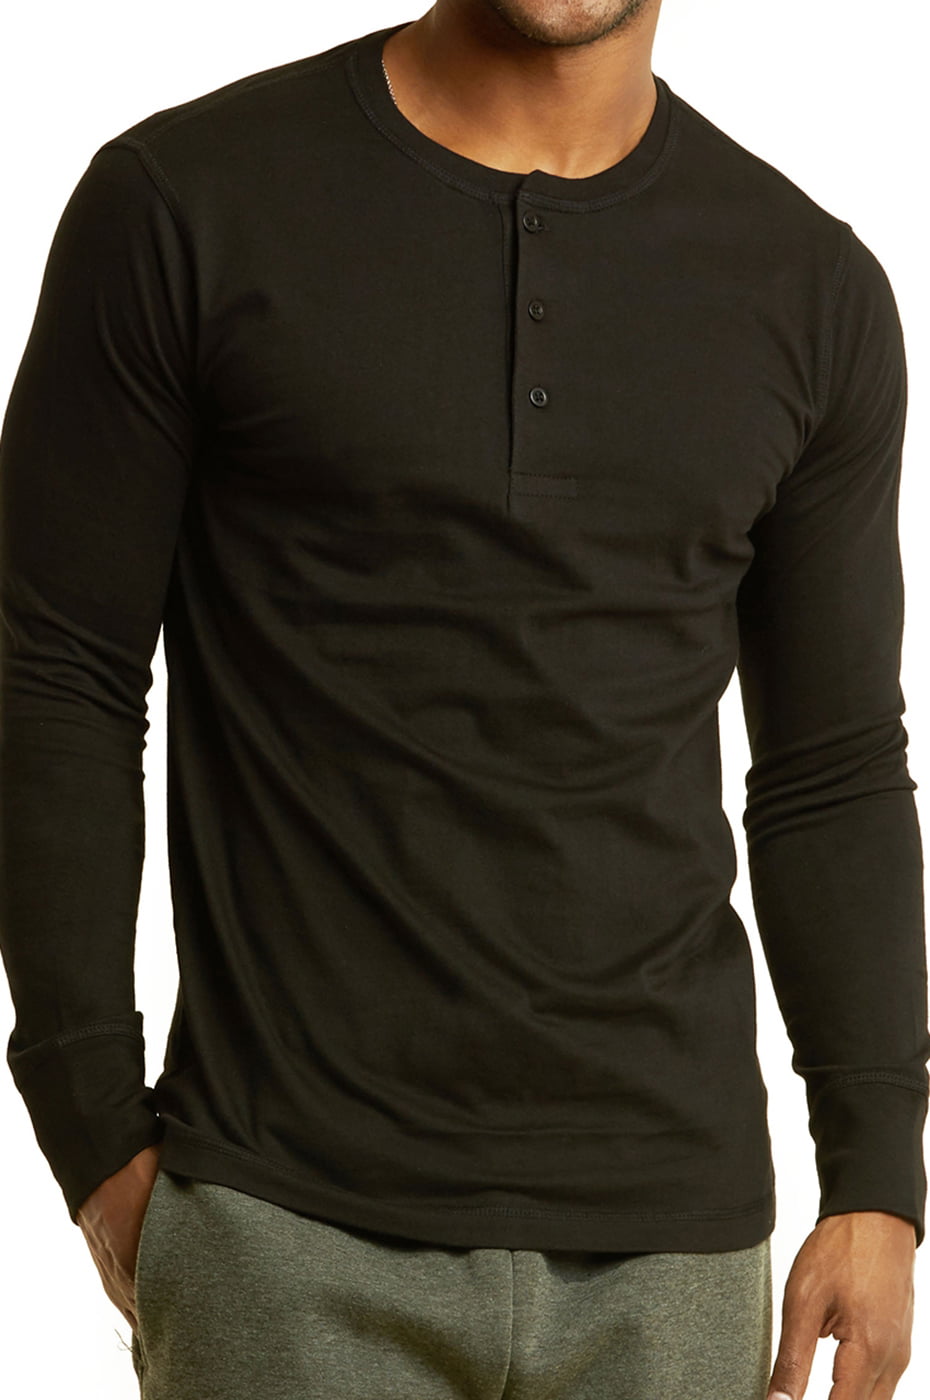 Blended - Men's Henley 3-Button Pullover Cotton T-Shirt Long Sleeve ...